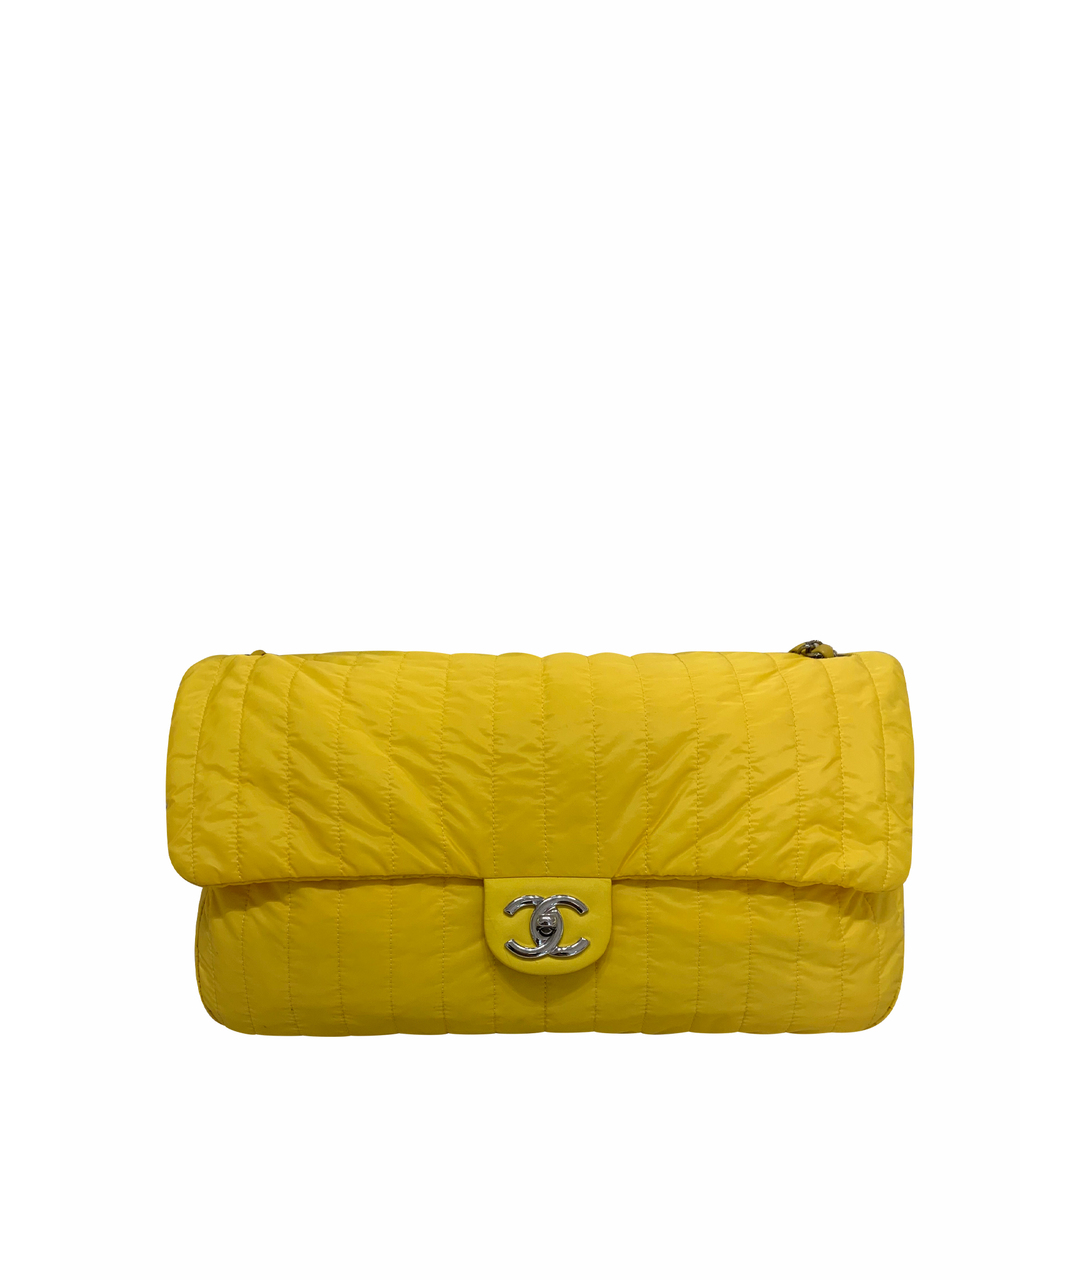 CHANEL PRE-OWNED Желтая синтетическая сумка через плечо, фото 1